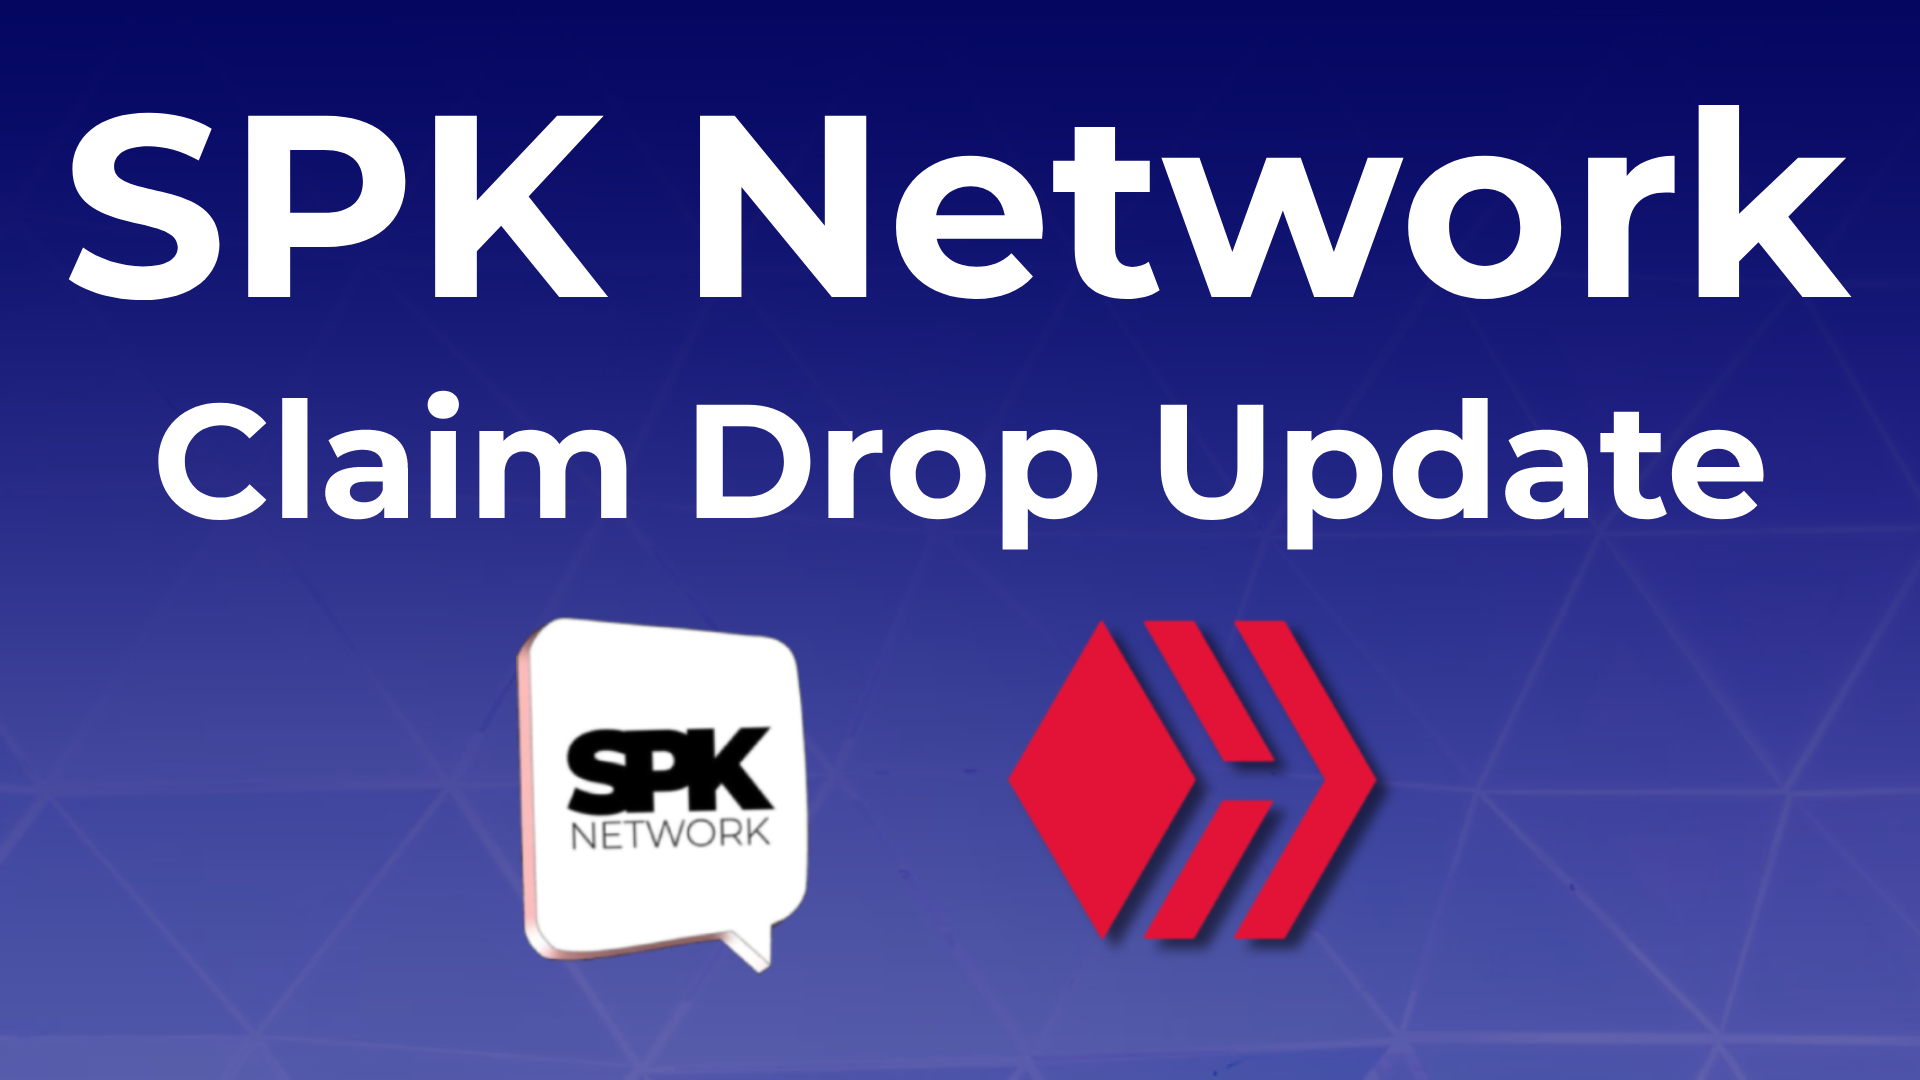 @spknetwork/larynx-miner-tokens-claim-drop-update